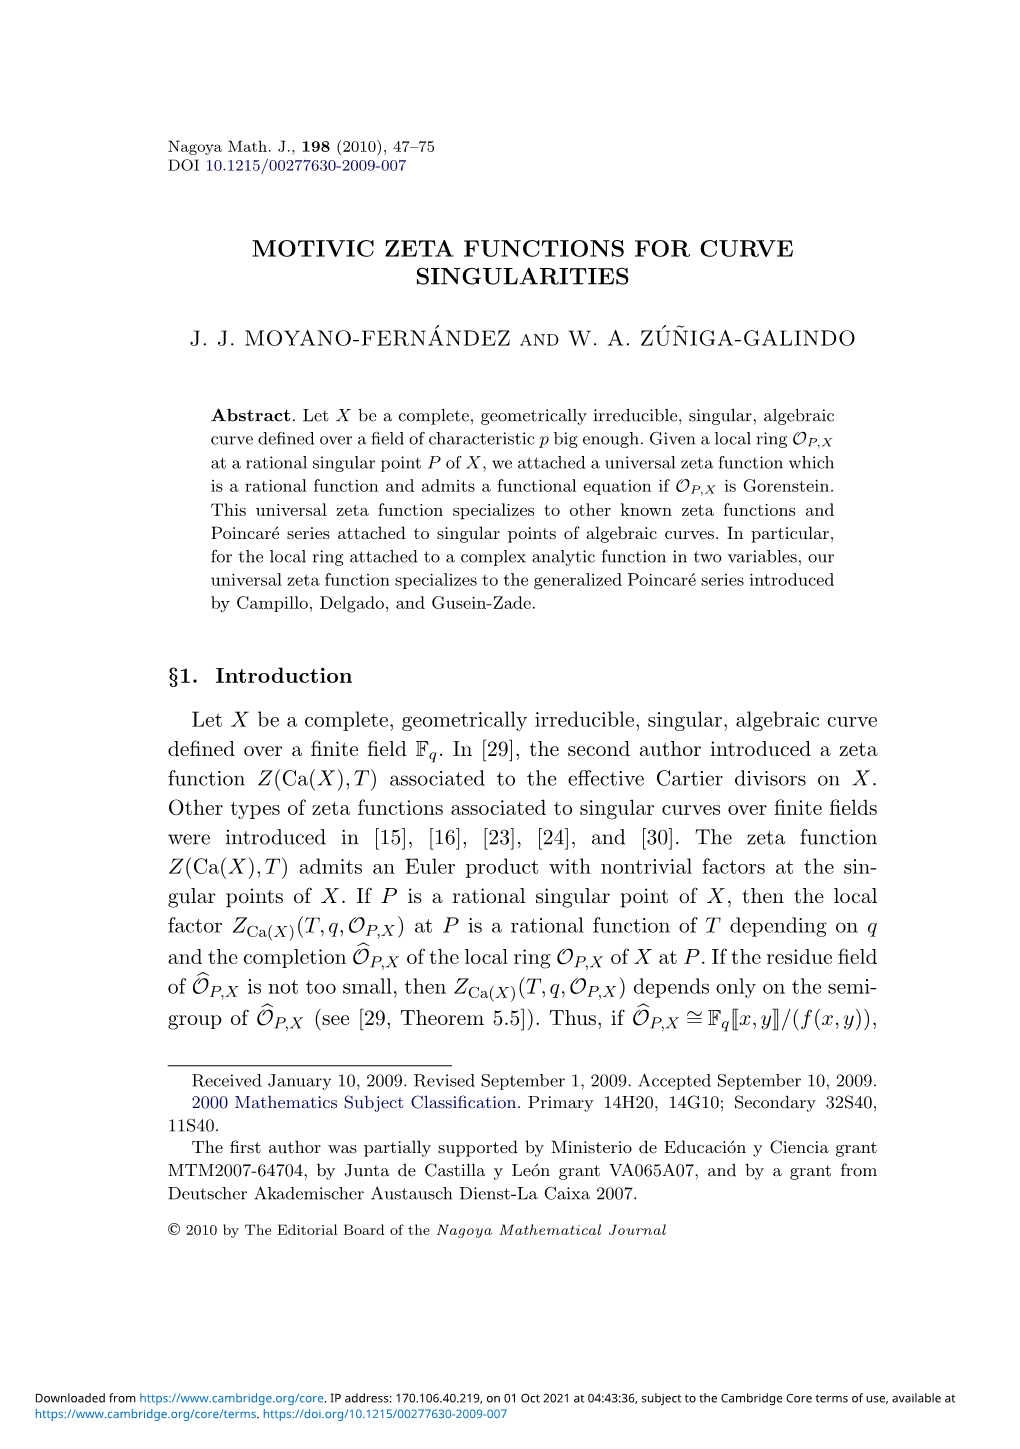 Motivic Zeta Functions for Curve Singularities